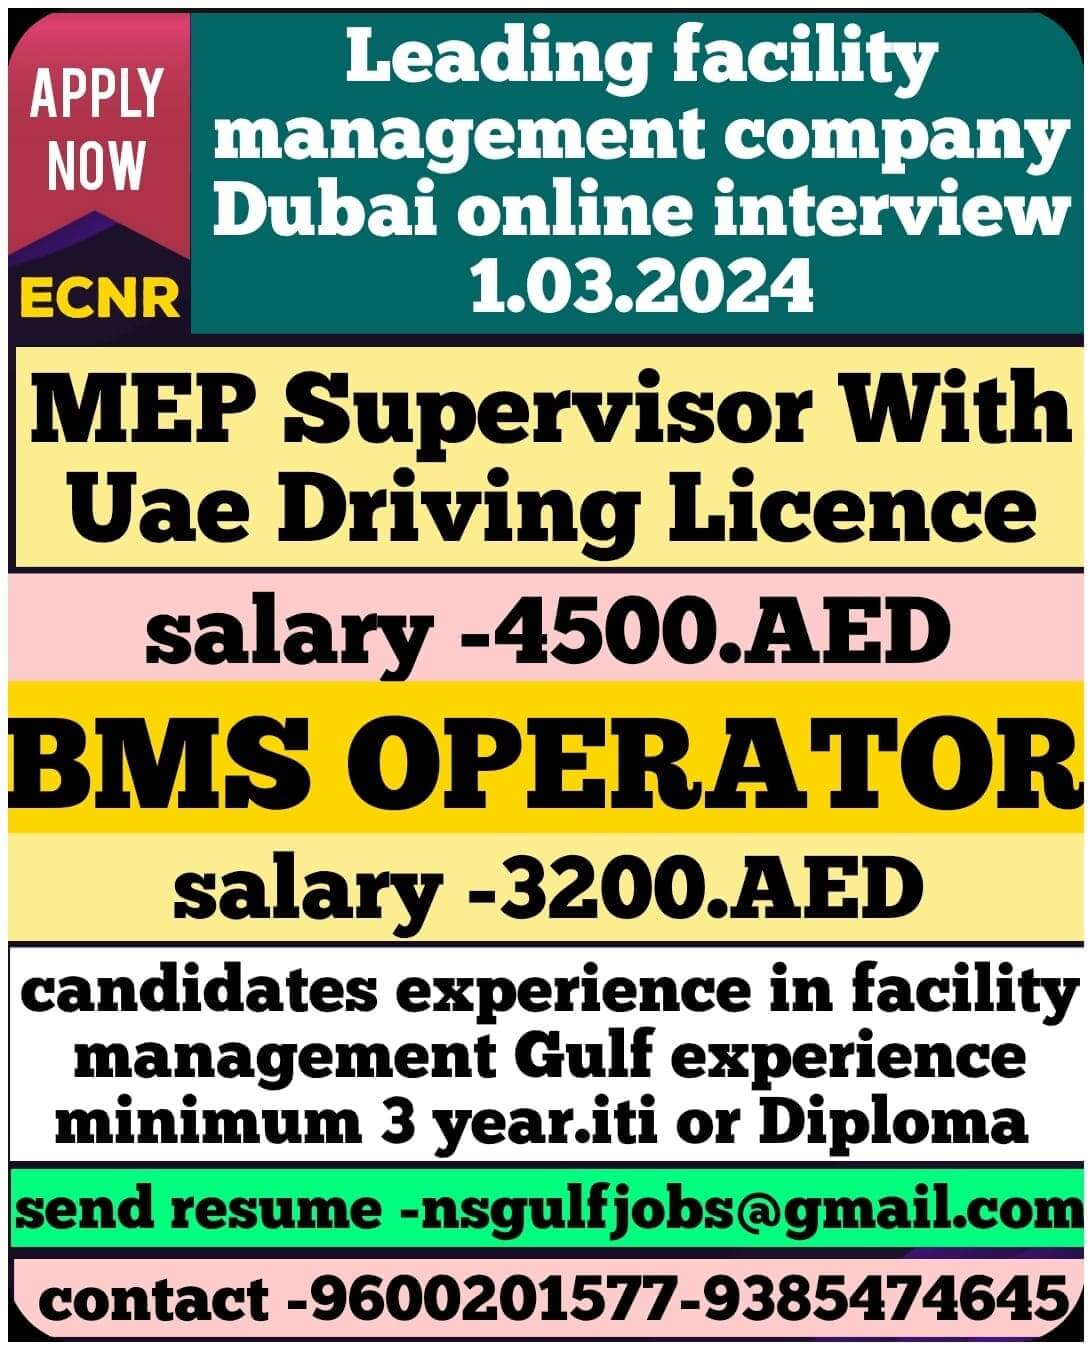 A leading facility management company online interview - Dubai